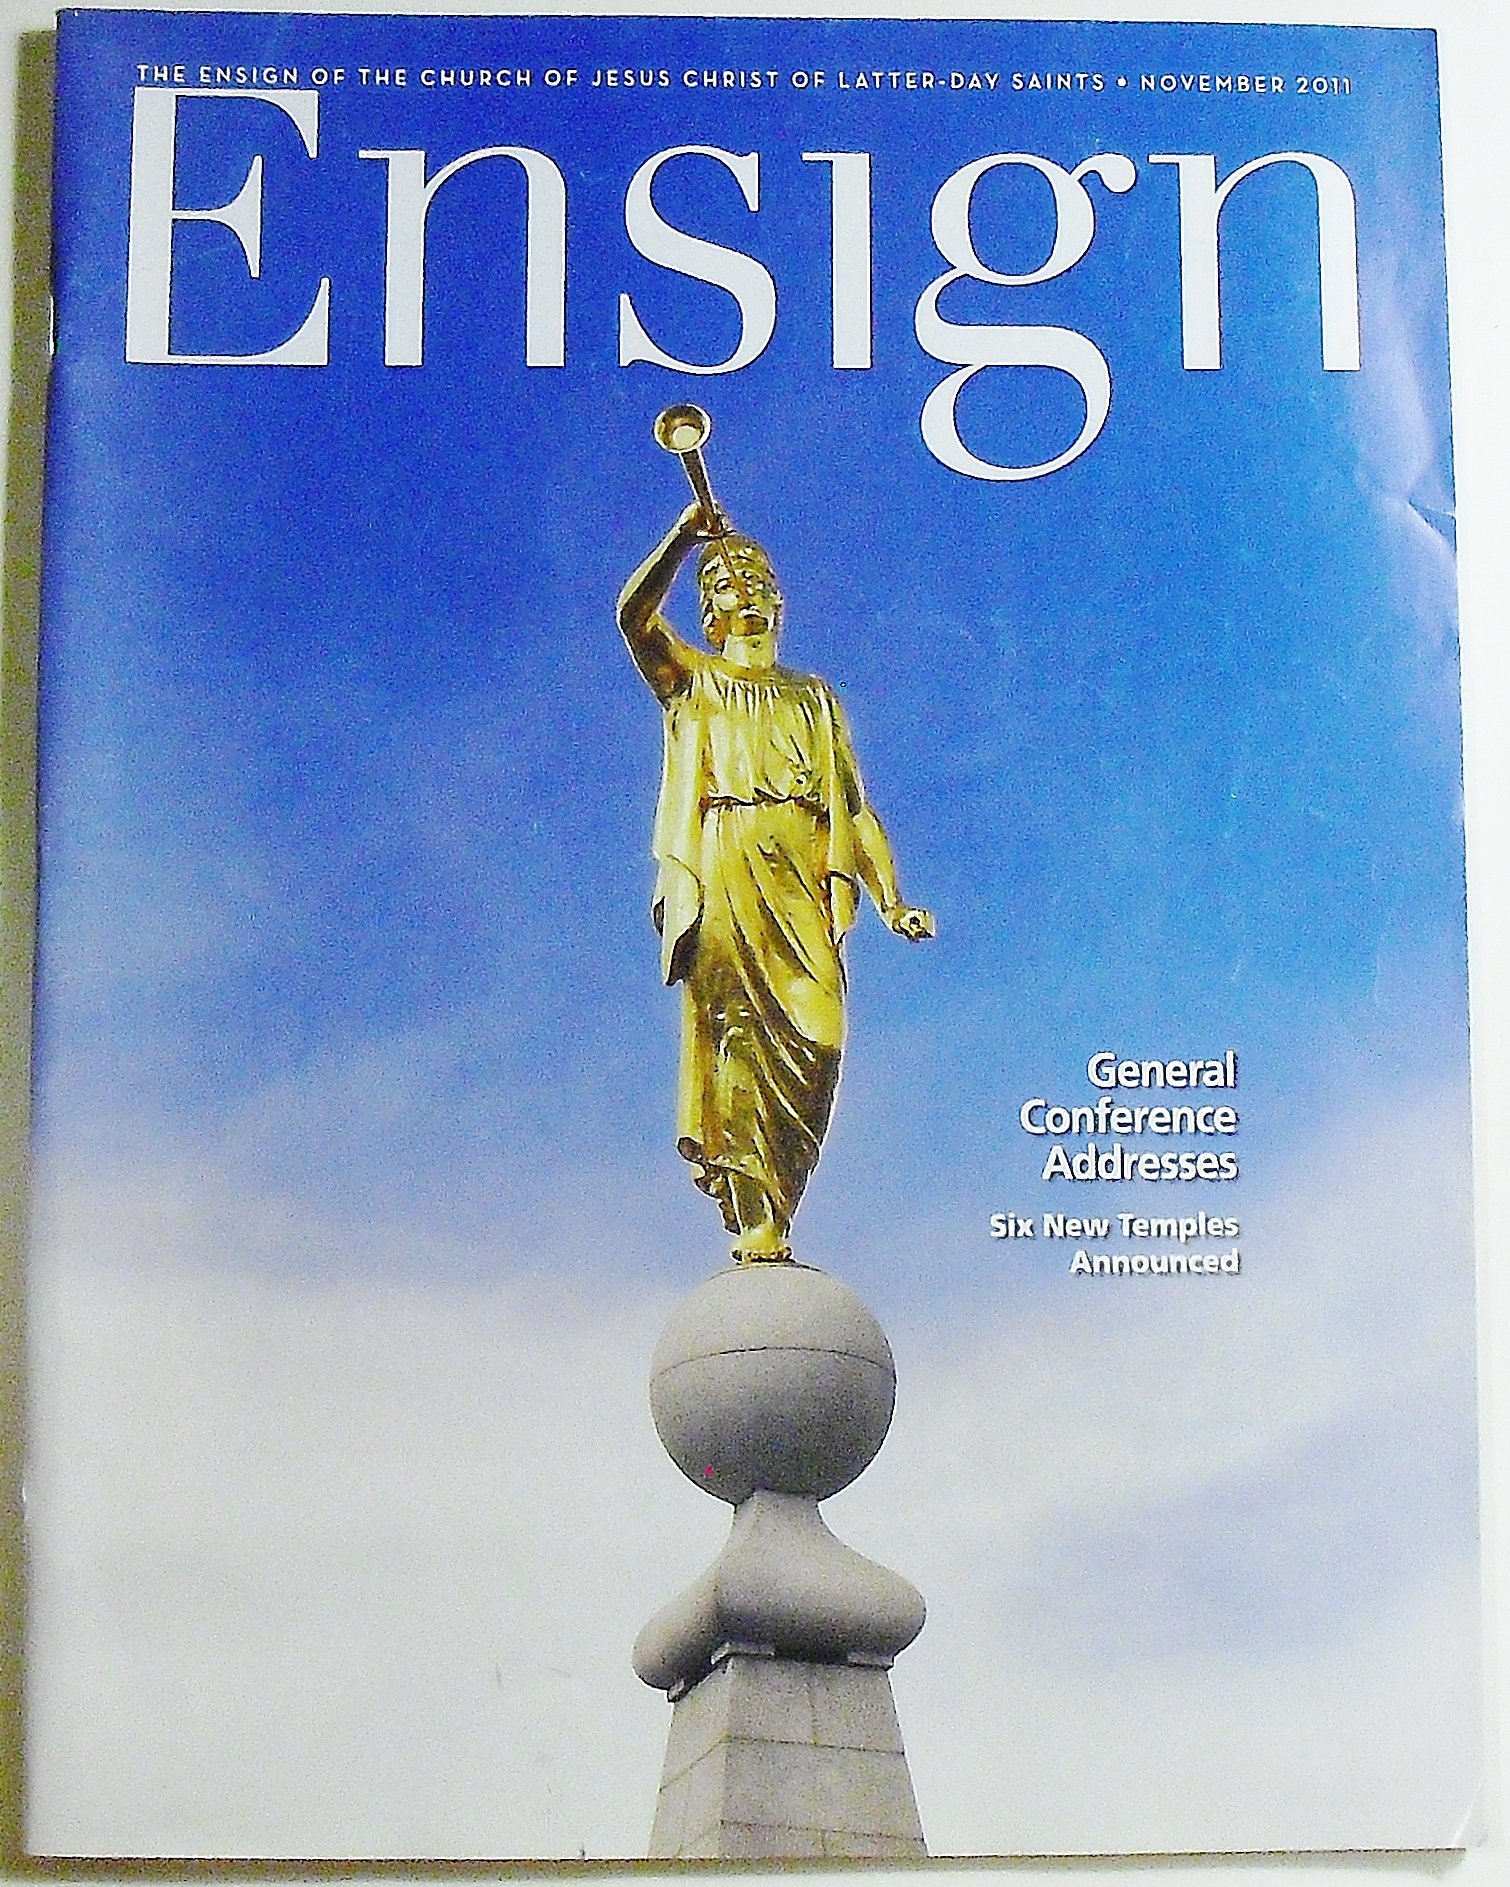 Ensign Magazine, Volume 41 Number 11, November 2011 - Picture 1 of 1